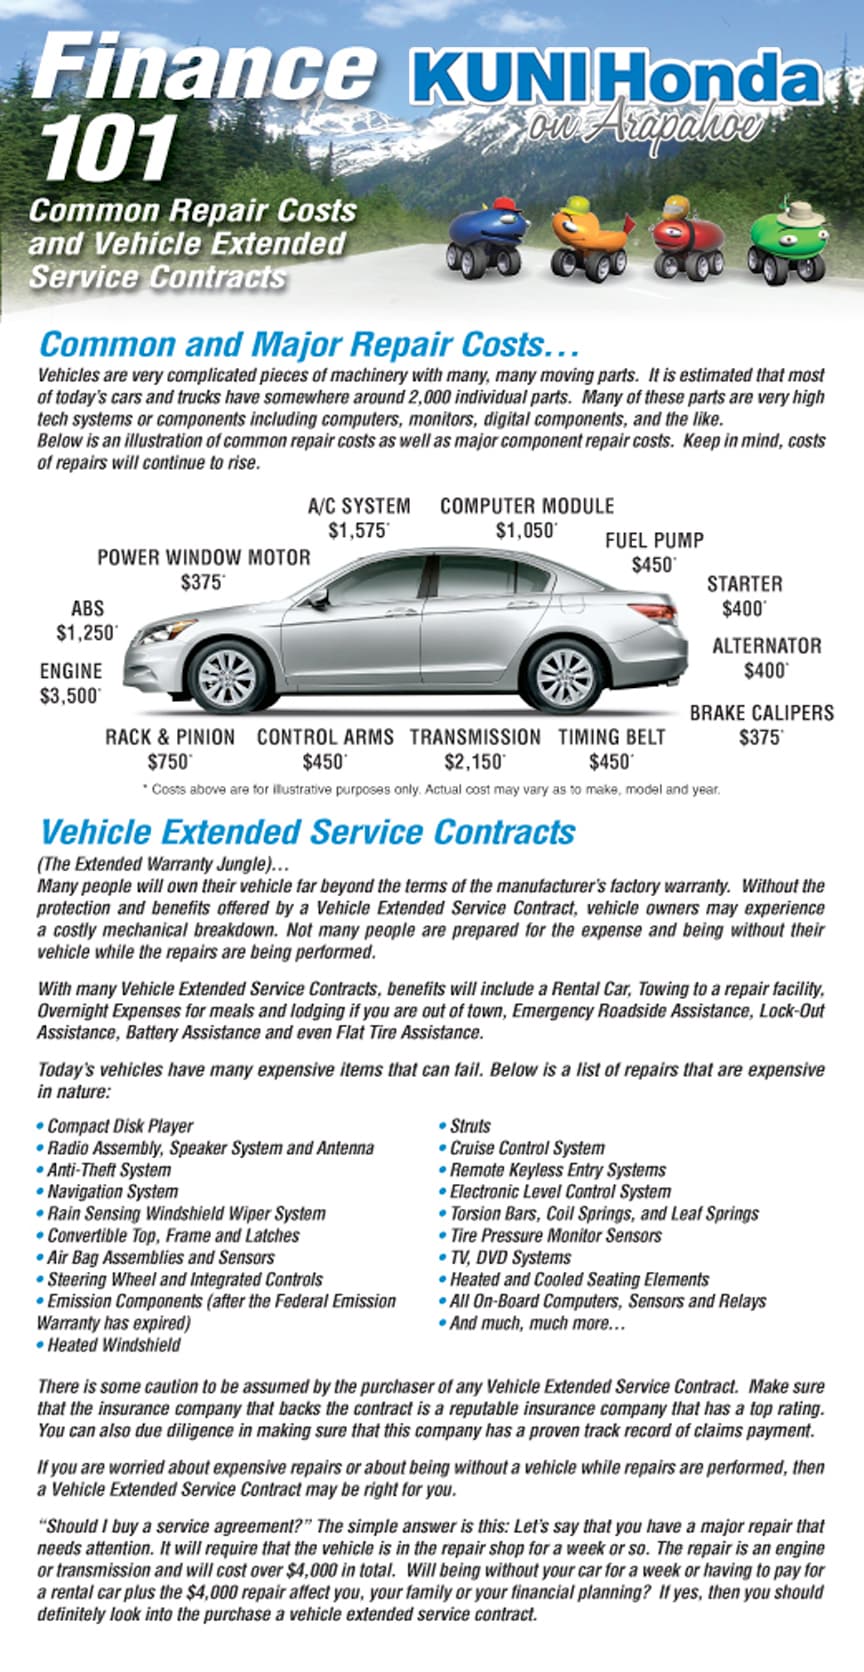 Honda service contract reimbursement guarantee #2